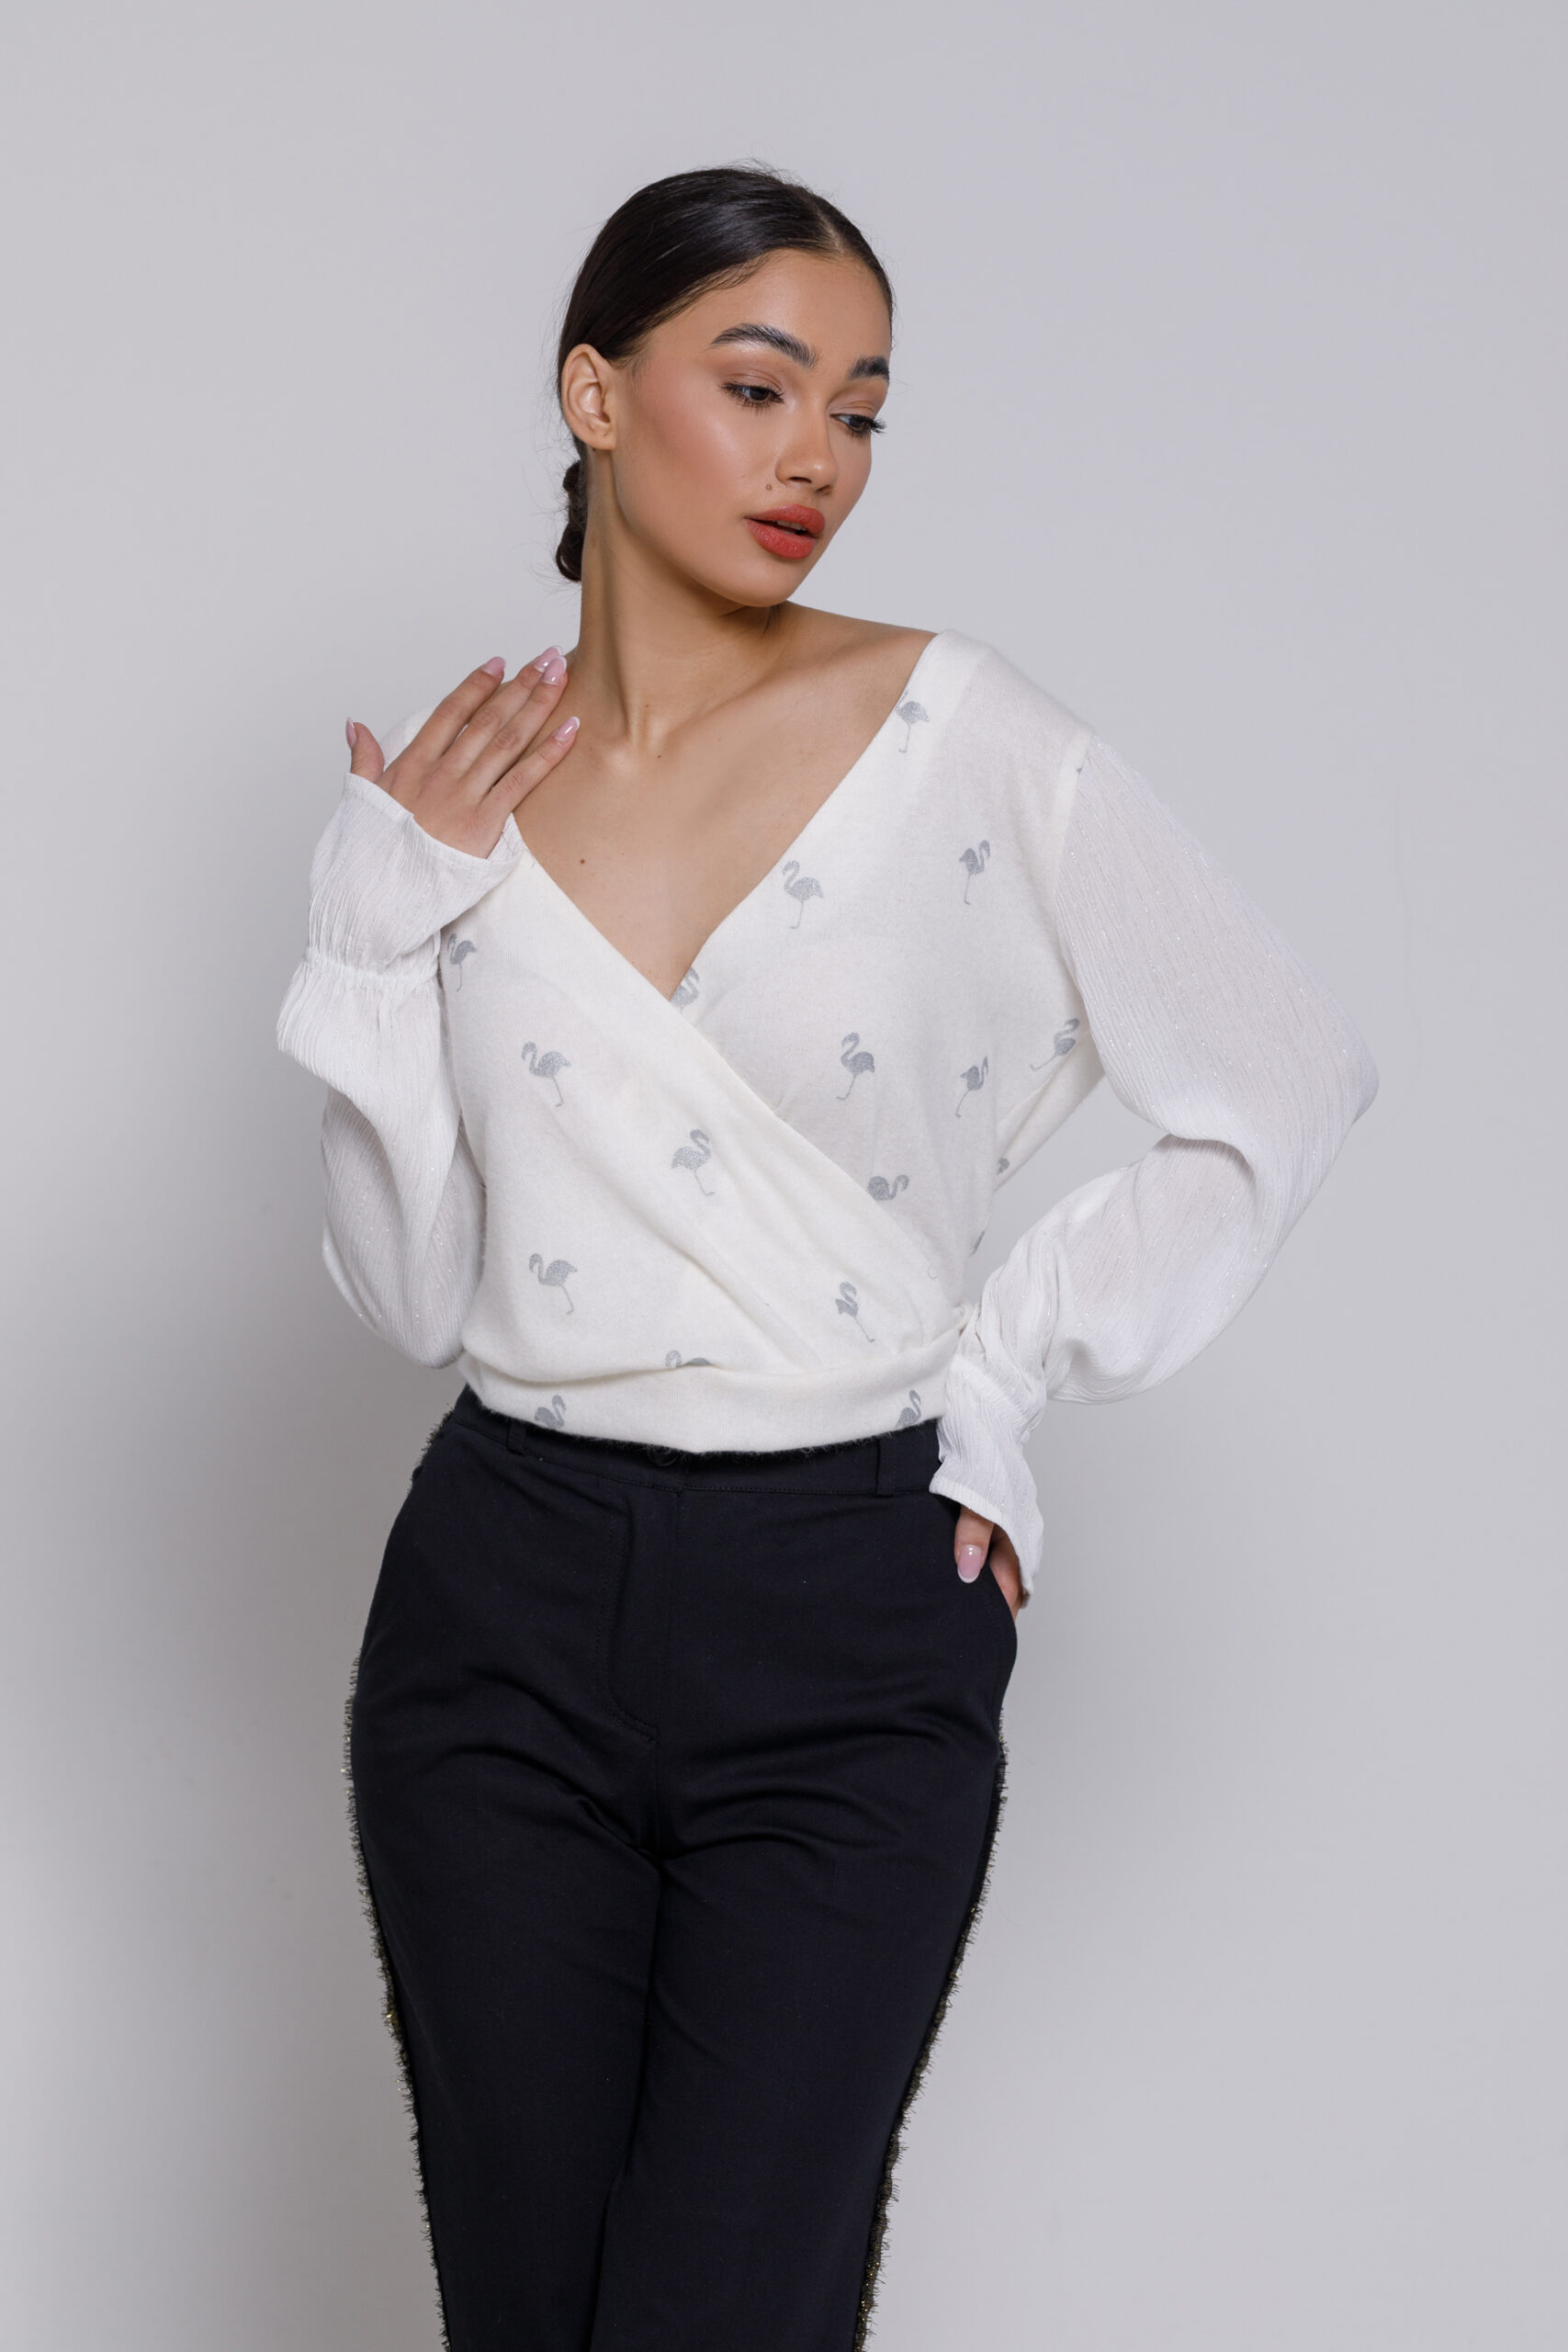 VIOLA White blouse. Natural fabrics, original design, handmade embroidery